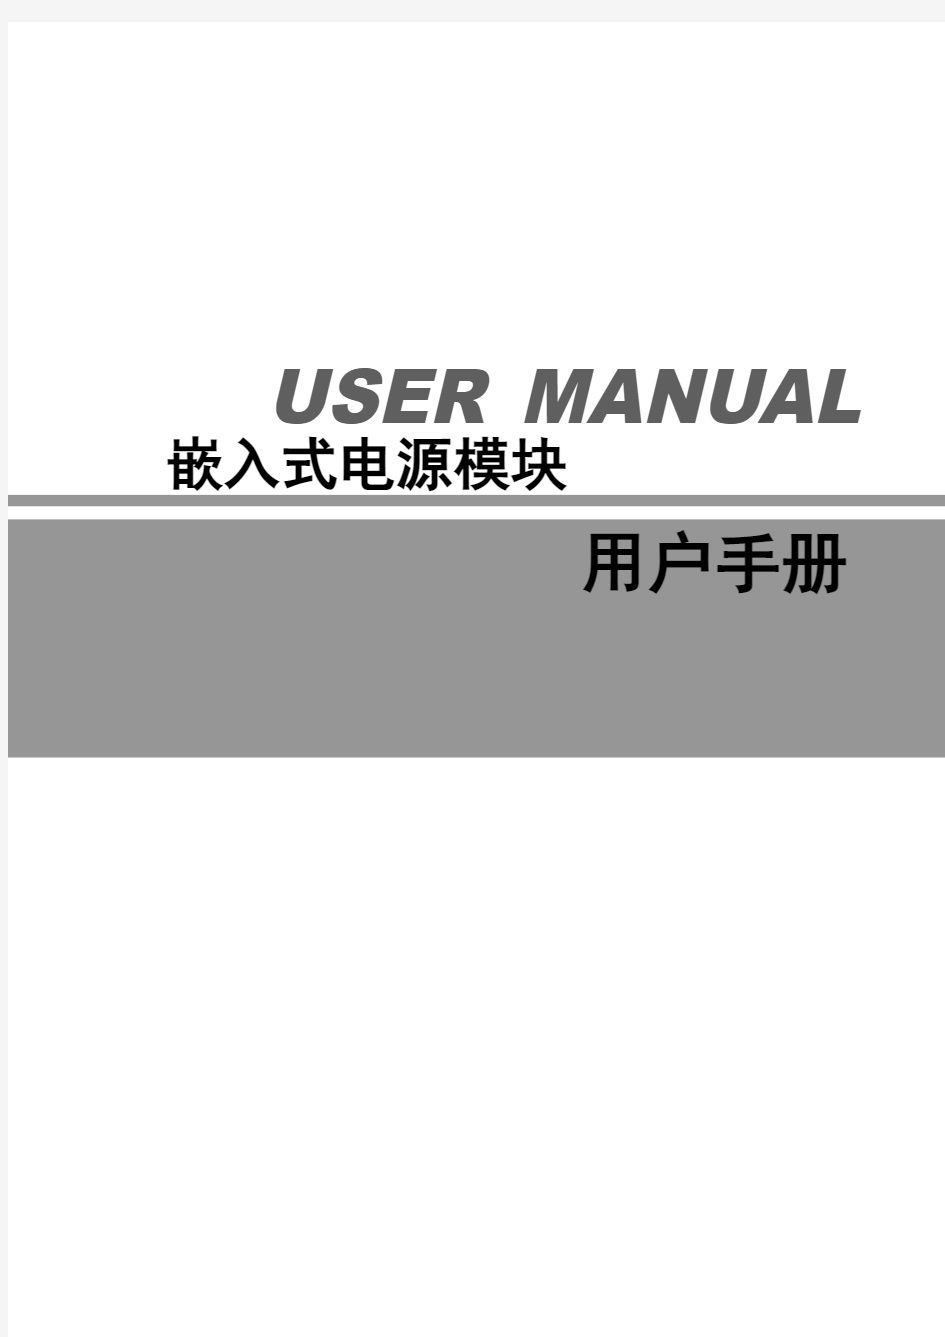 USERMANUAL嵌入式电源模块用户手册